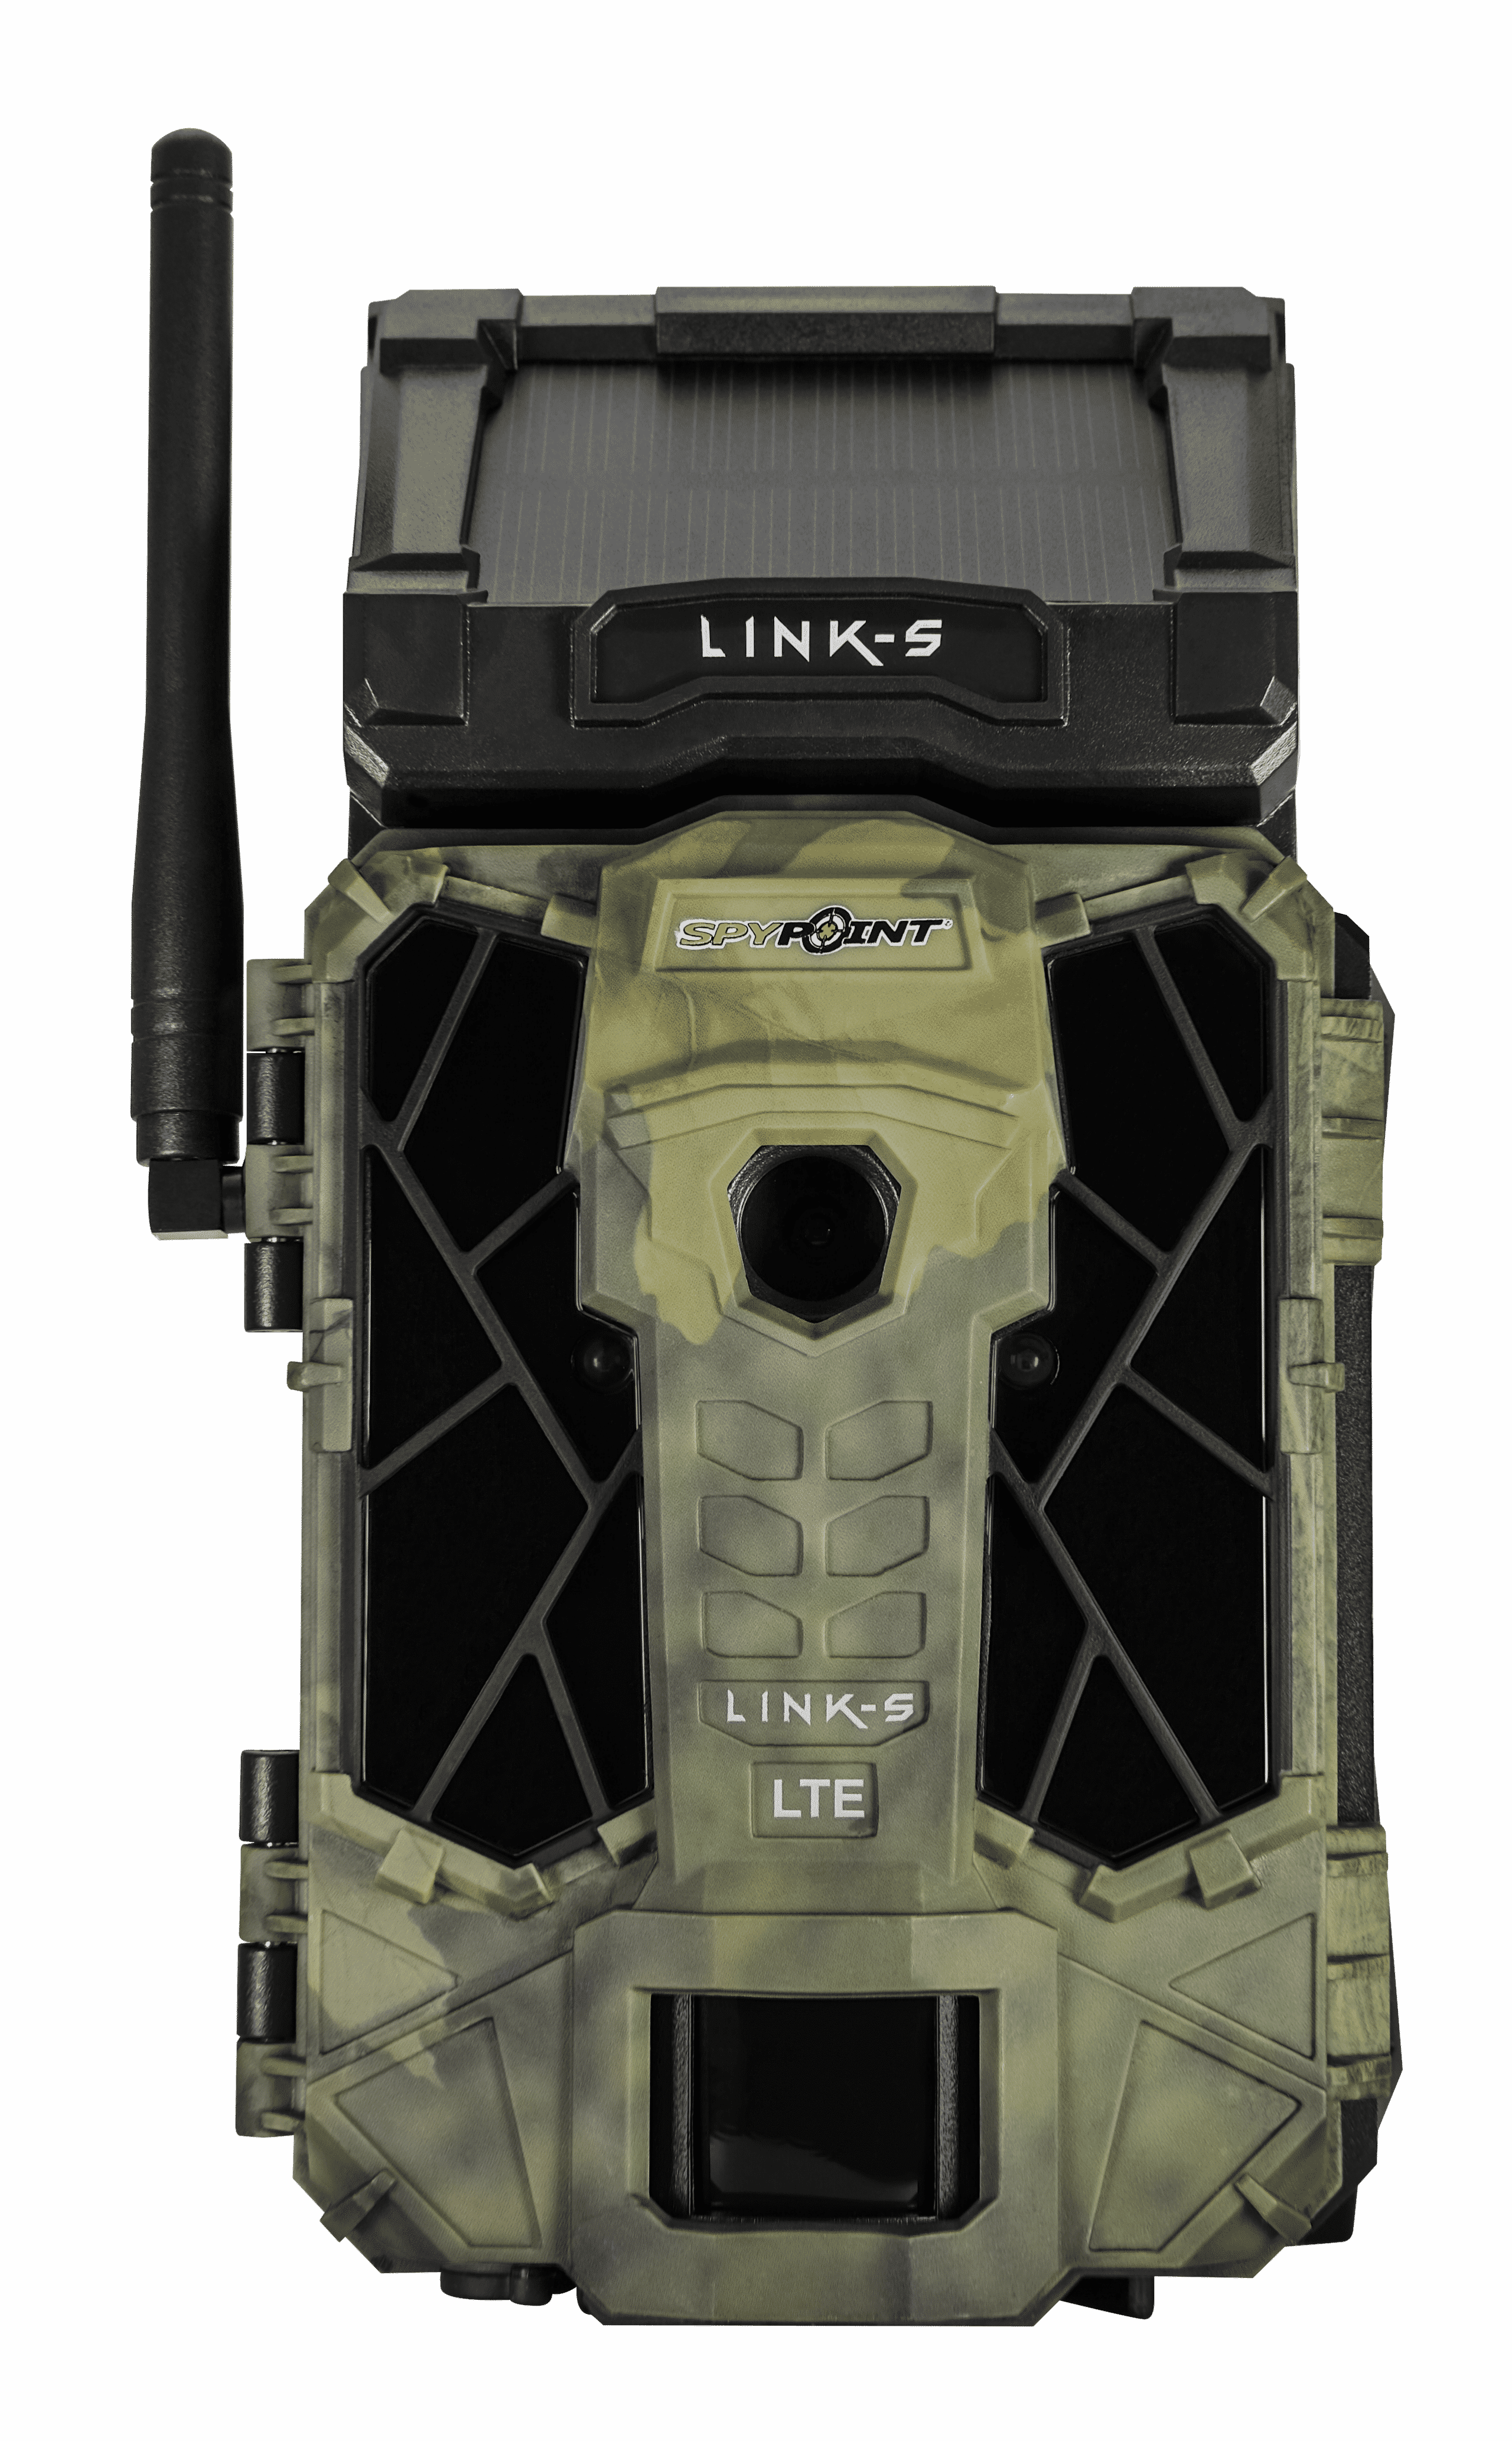 SPYPOINT LINK-S-V Cellular Trail Camera 12 MP -$299.99(52% Off)